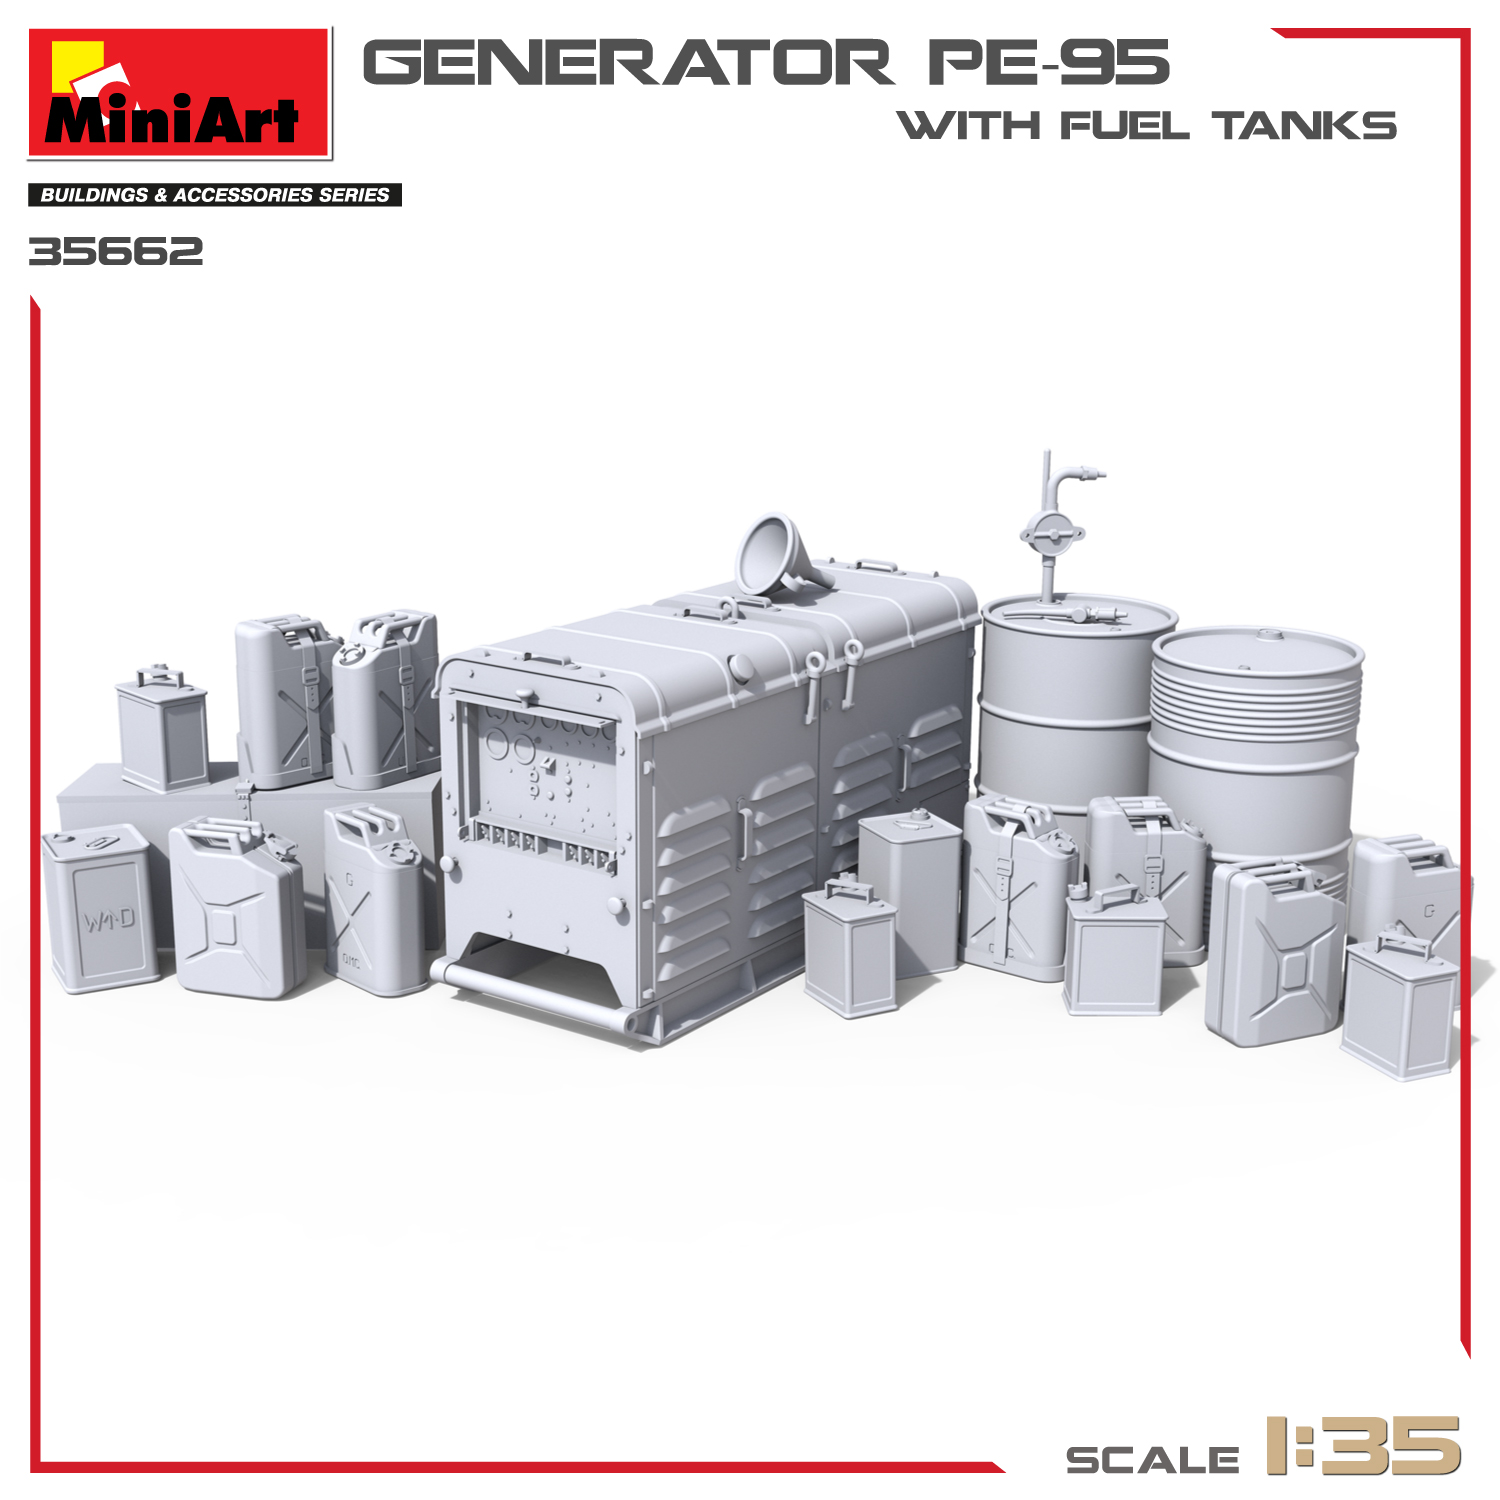 Miniart 1/35 Generator PE-95 with Fuel Tanks # 35662